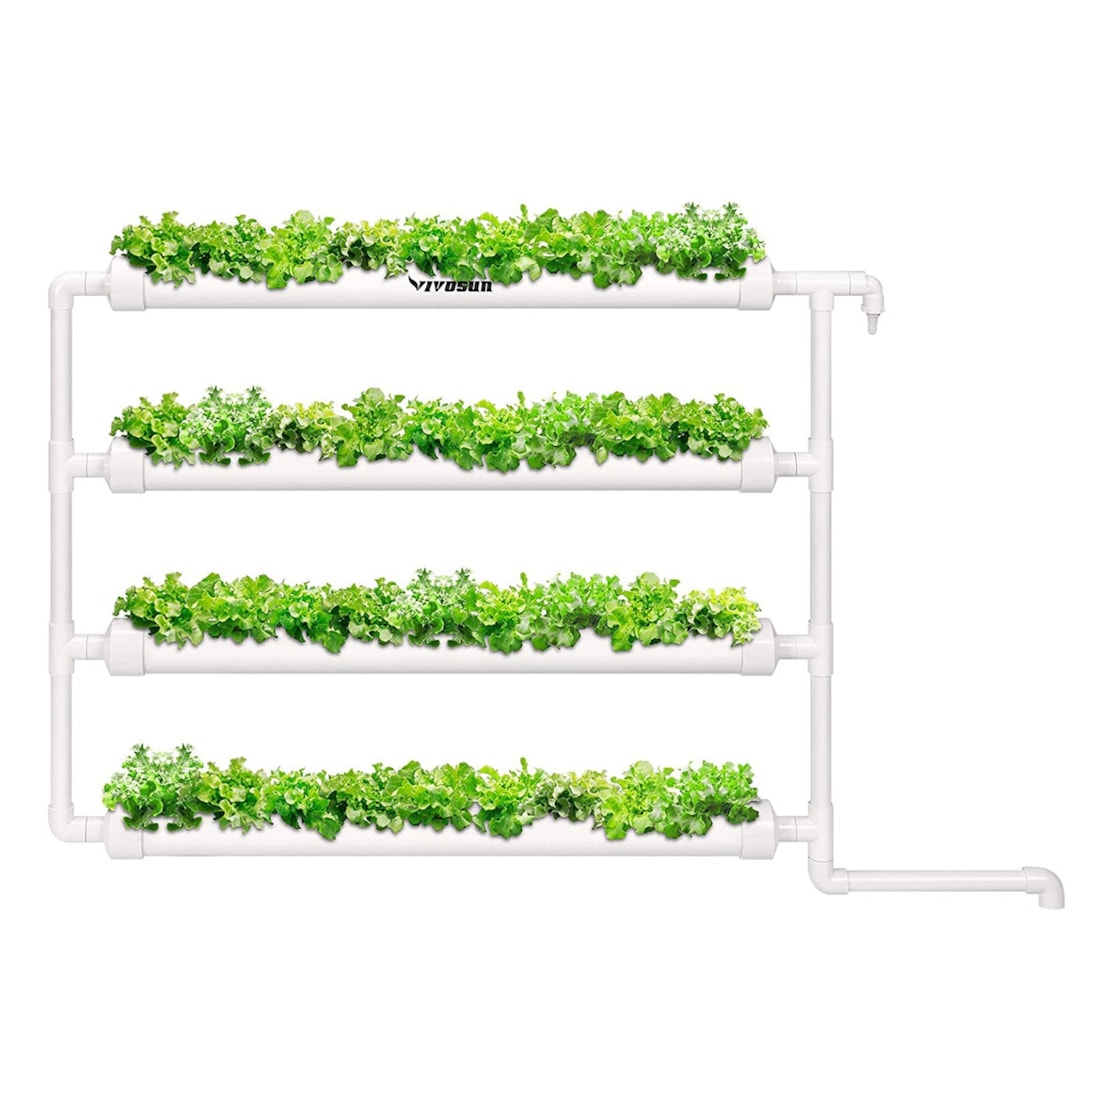 VIVOSUN Wall-Mounted Hydroponic Grow Kit 1 Layers 36 Plant Sites